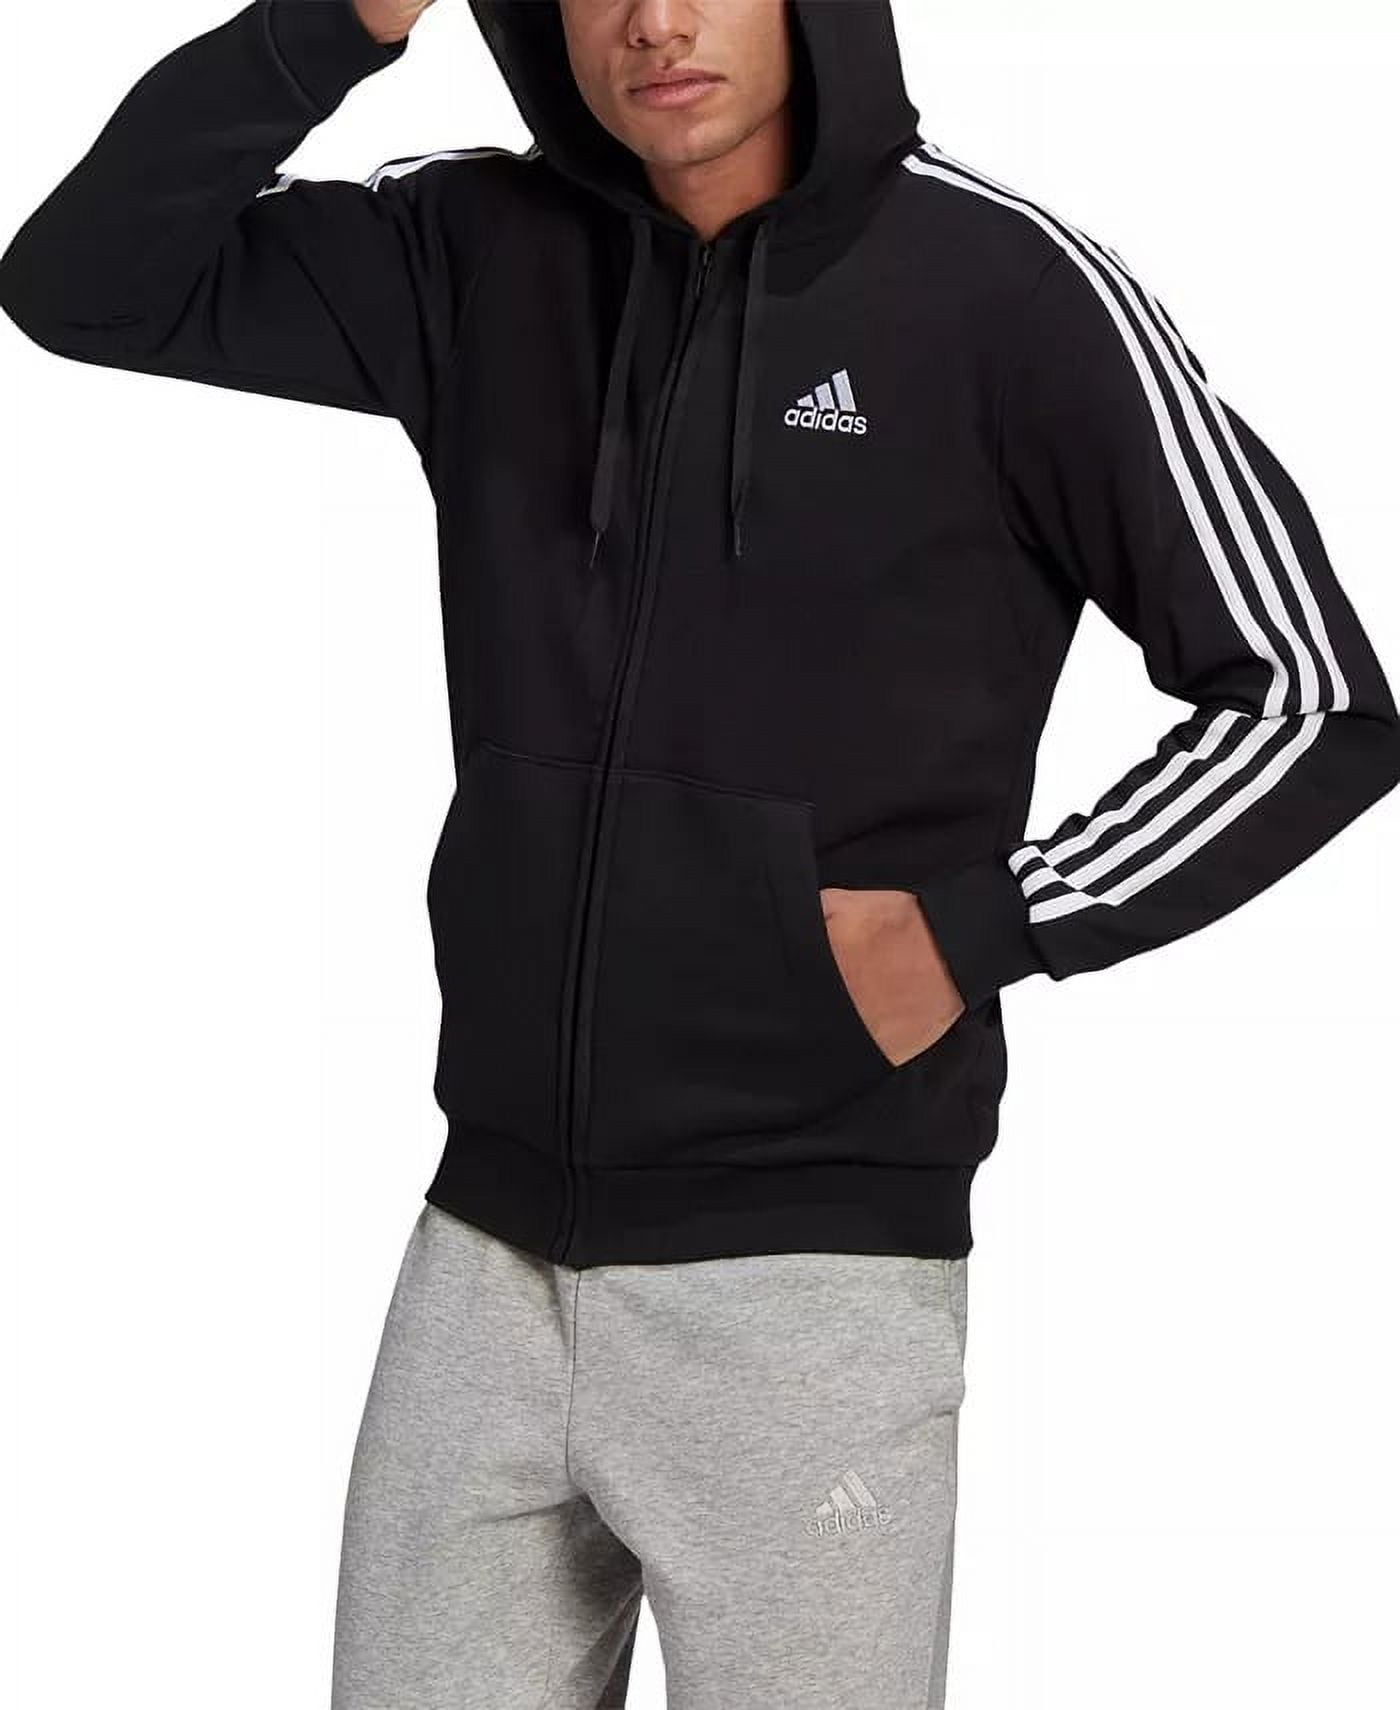 præmedicinering mest Savant Adidas BLACK Men's Essentials Fleece 3-Stripes Full-Zip Hoodie, US Medium -  Walmart.com